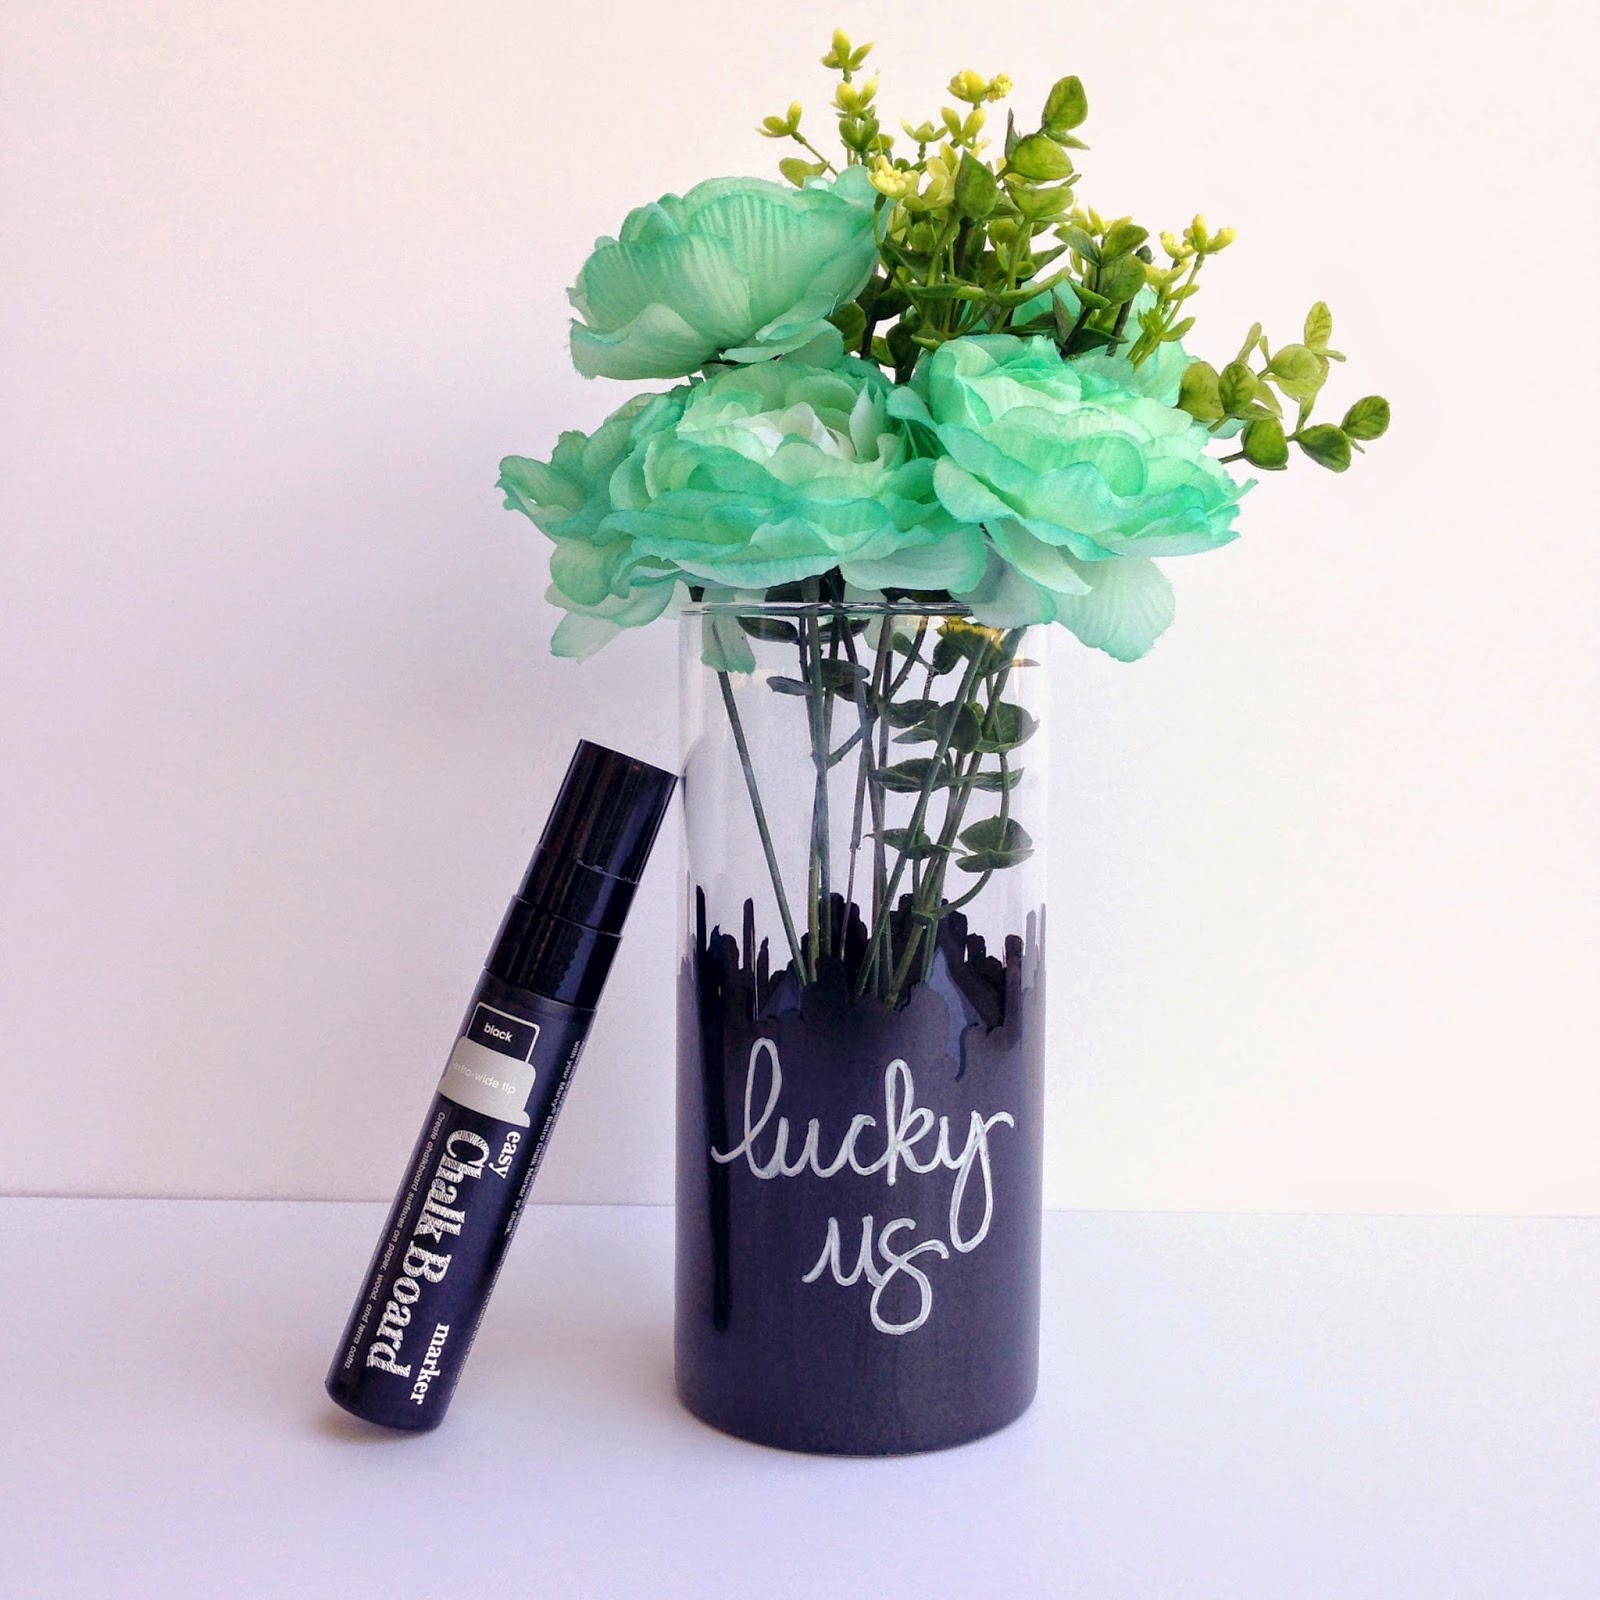 SRM Stickers Blog - Chalkboard "Lucky Us" Vase by Tessa - #chalkboard #chalkmarkers #easy #blackboard #homedecor #stpatricksday #DIY